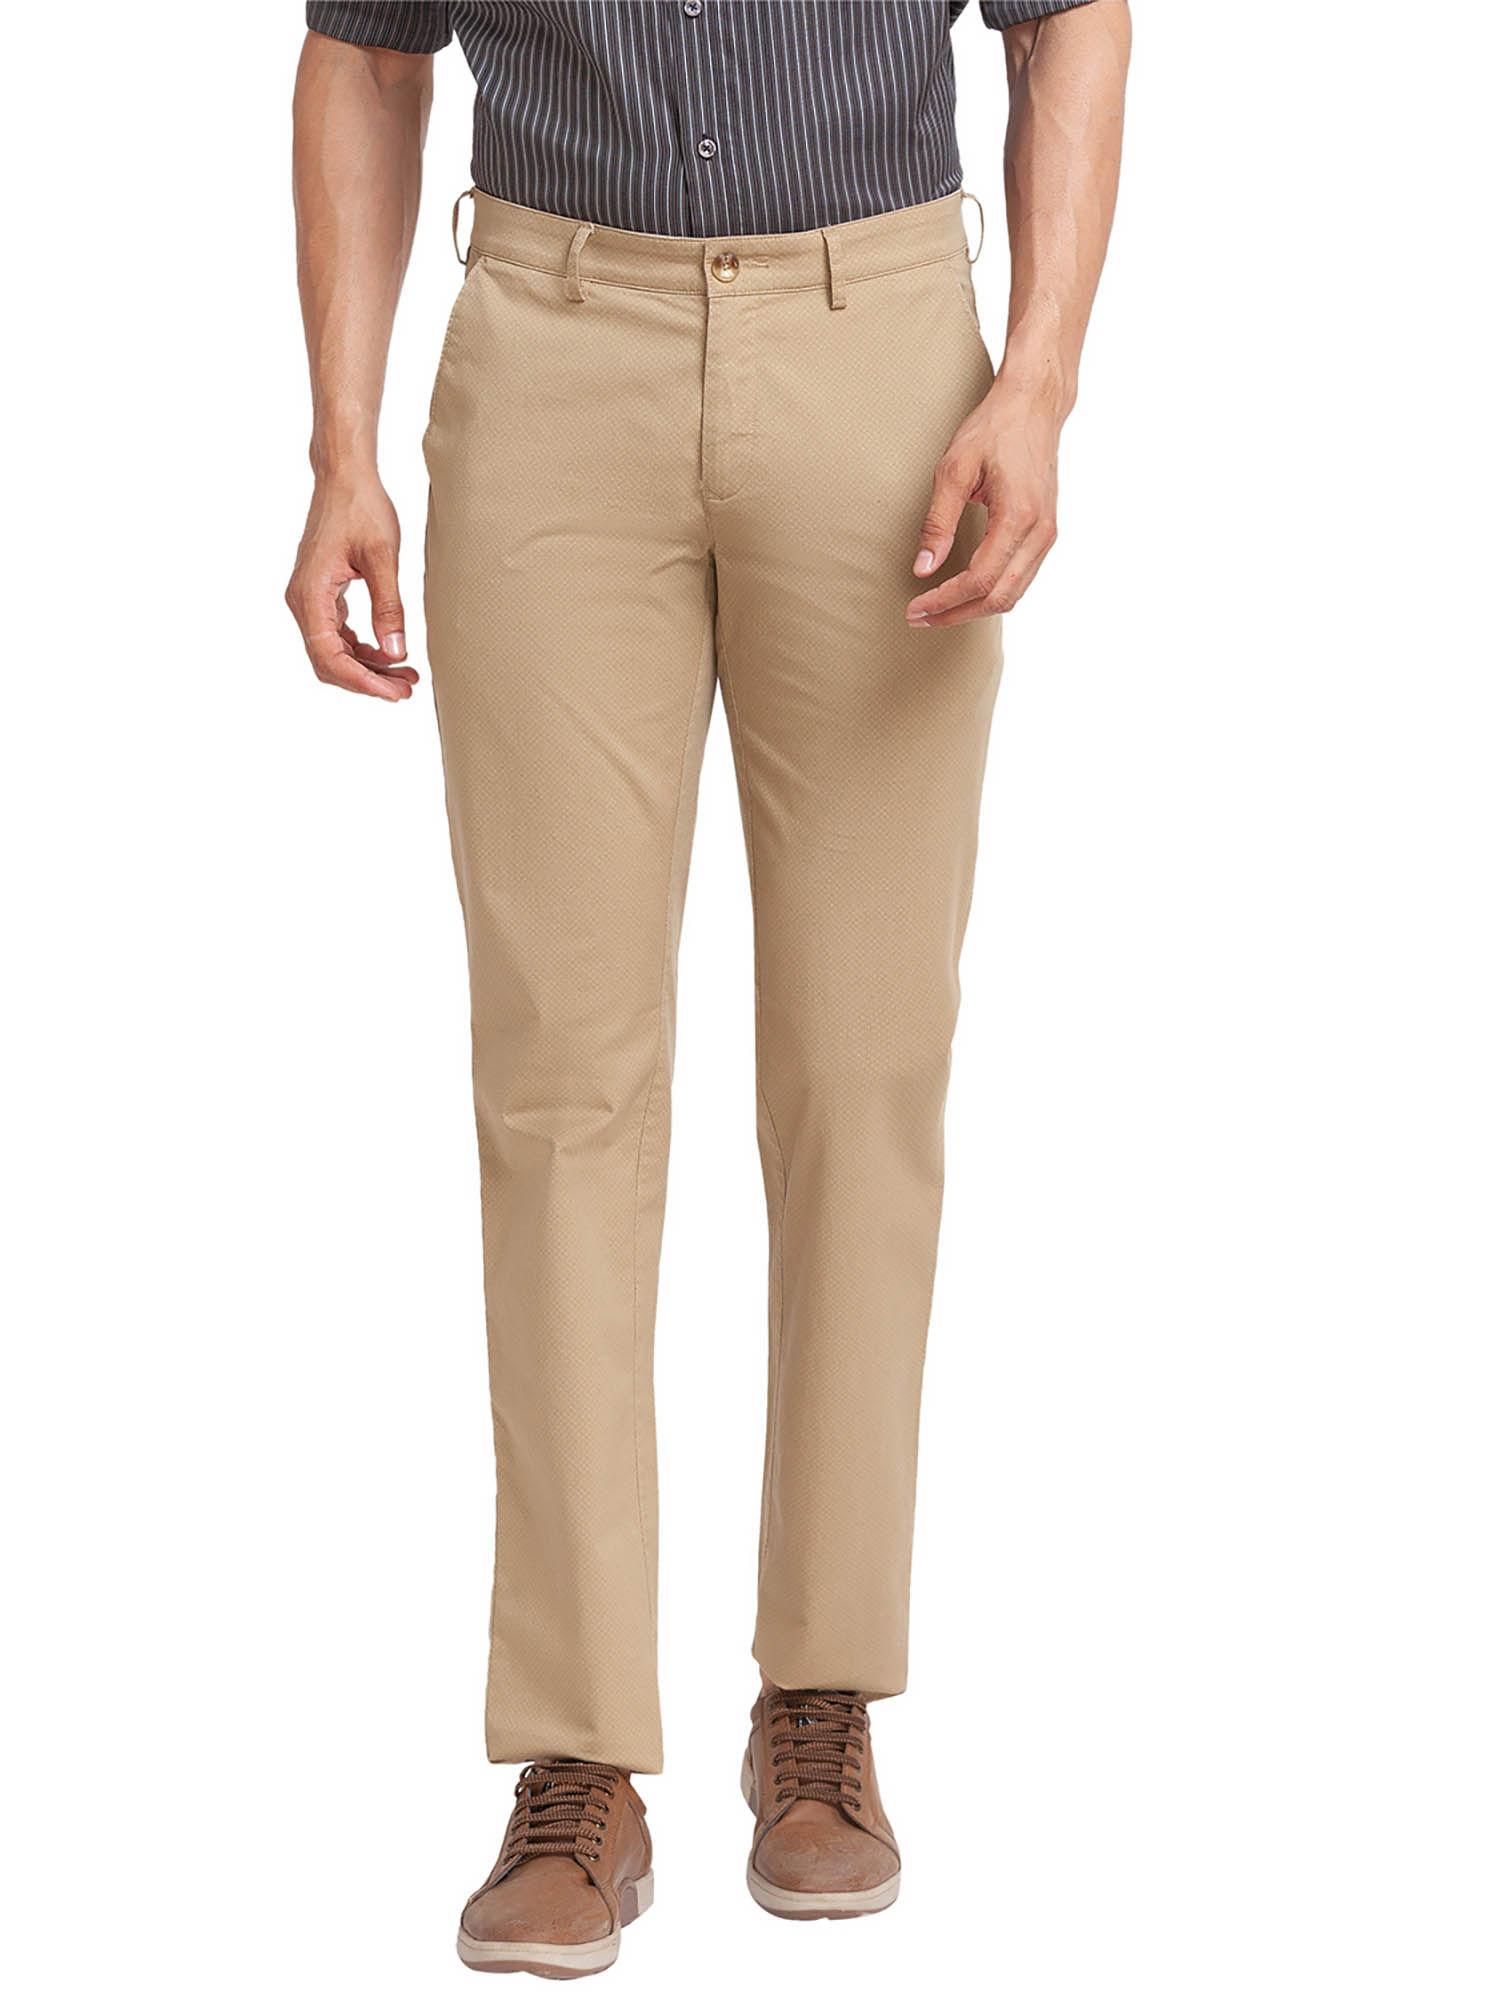 comfortable fit printed brown trouser